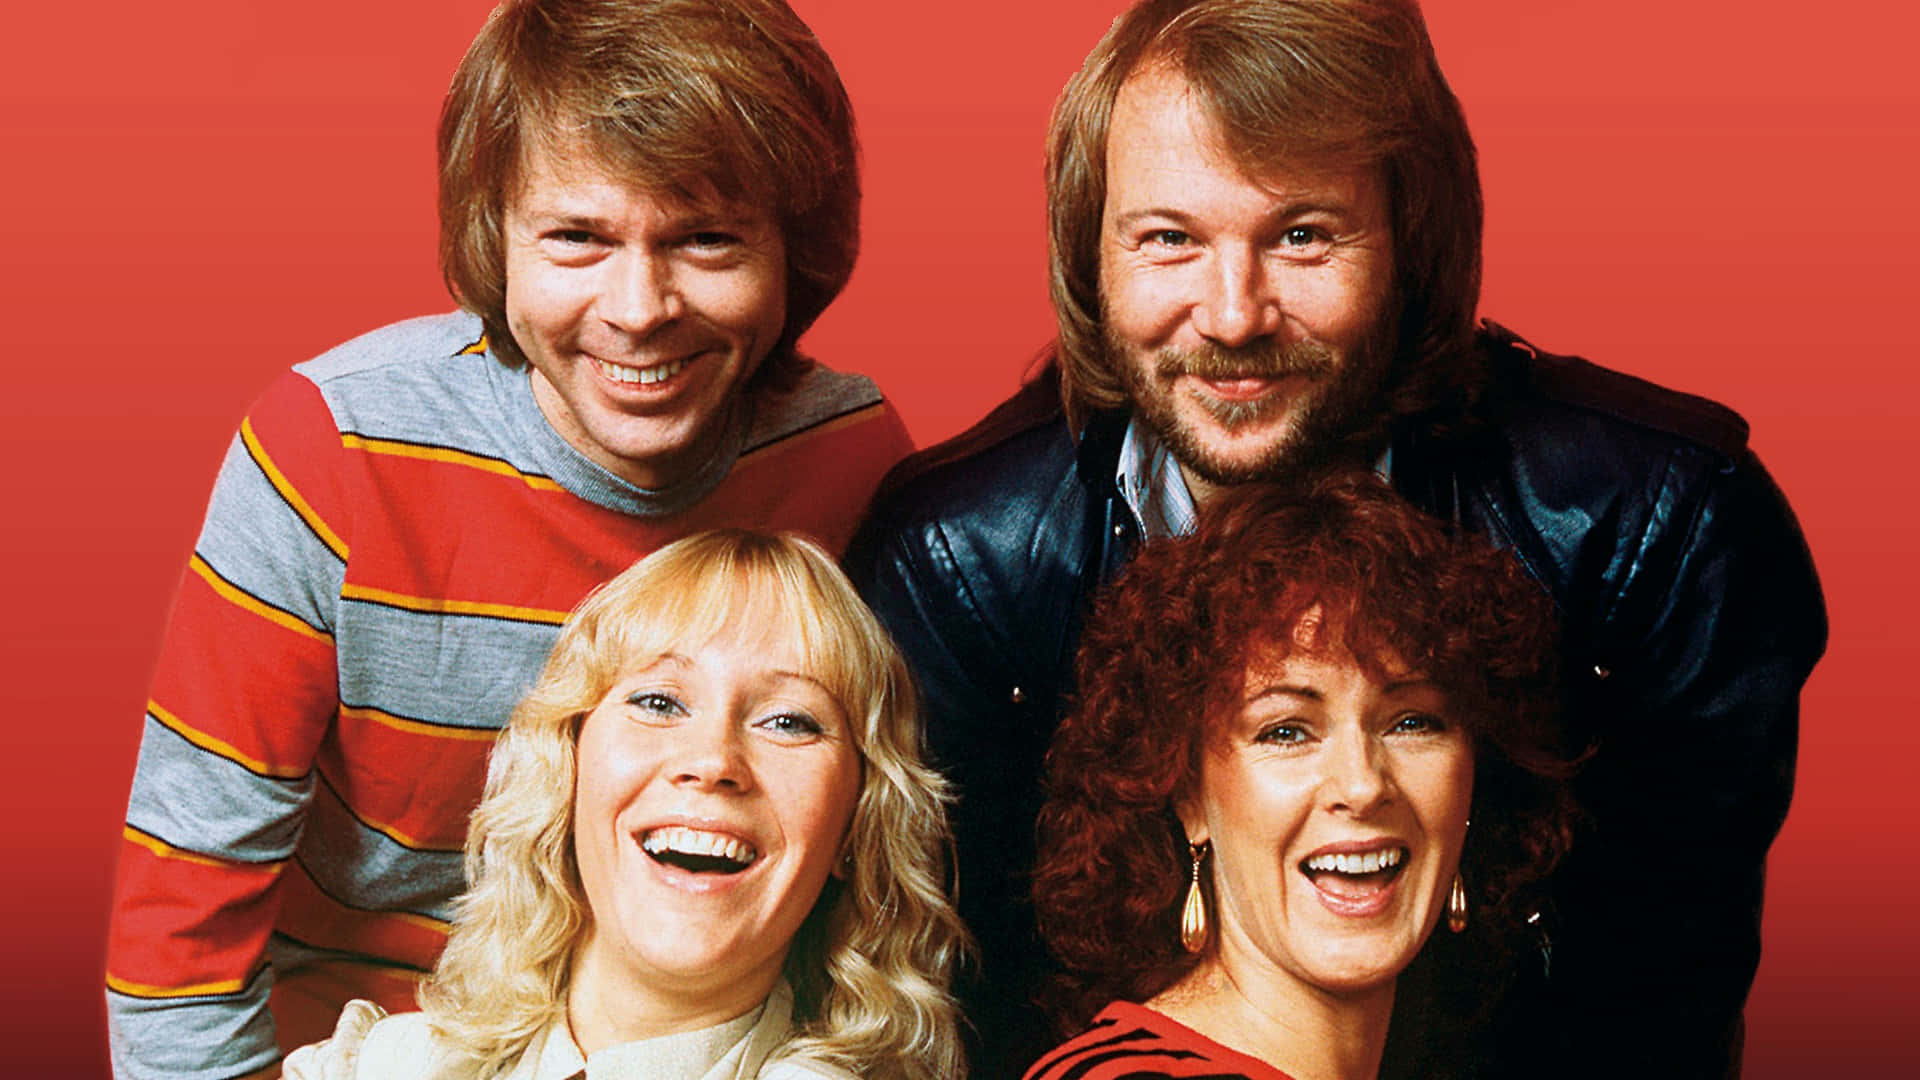 Abba - A Legendary Swedish Music Group